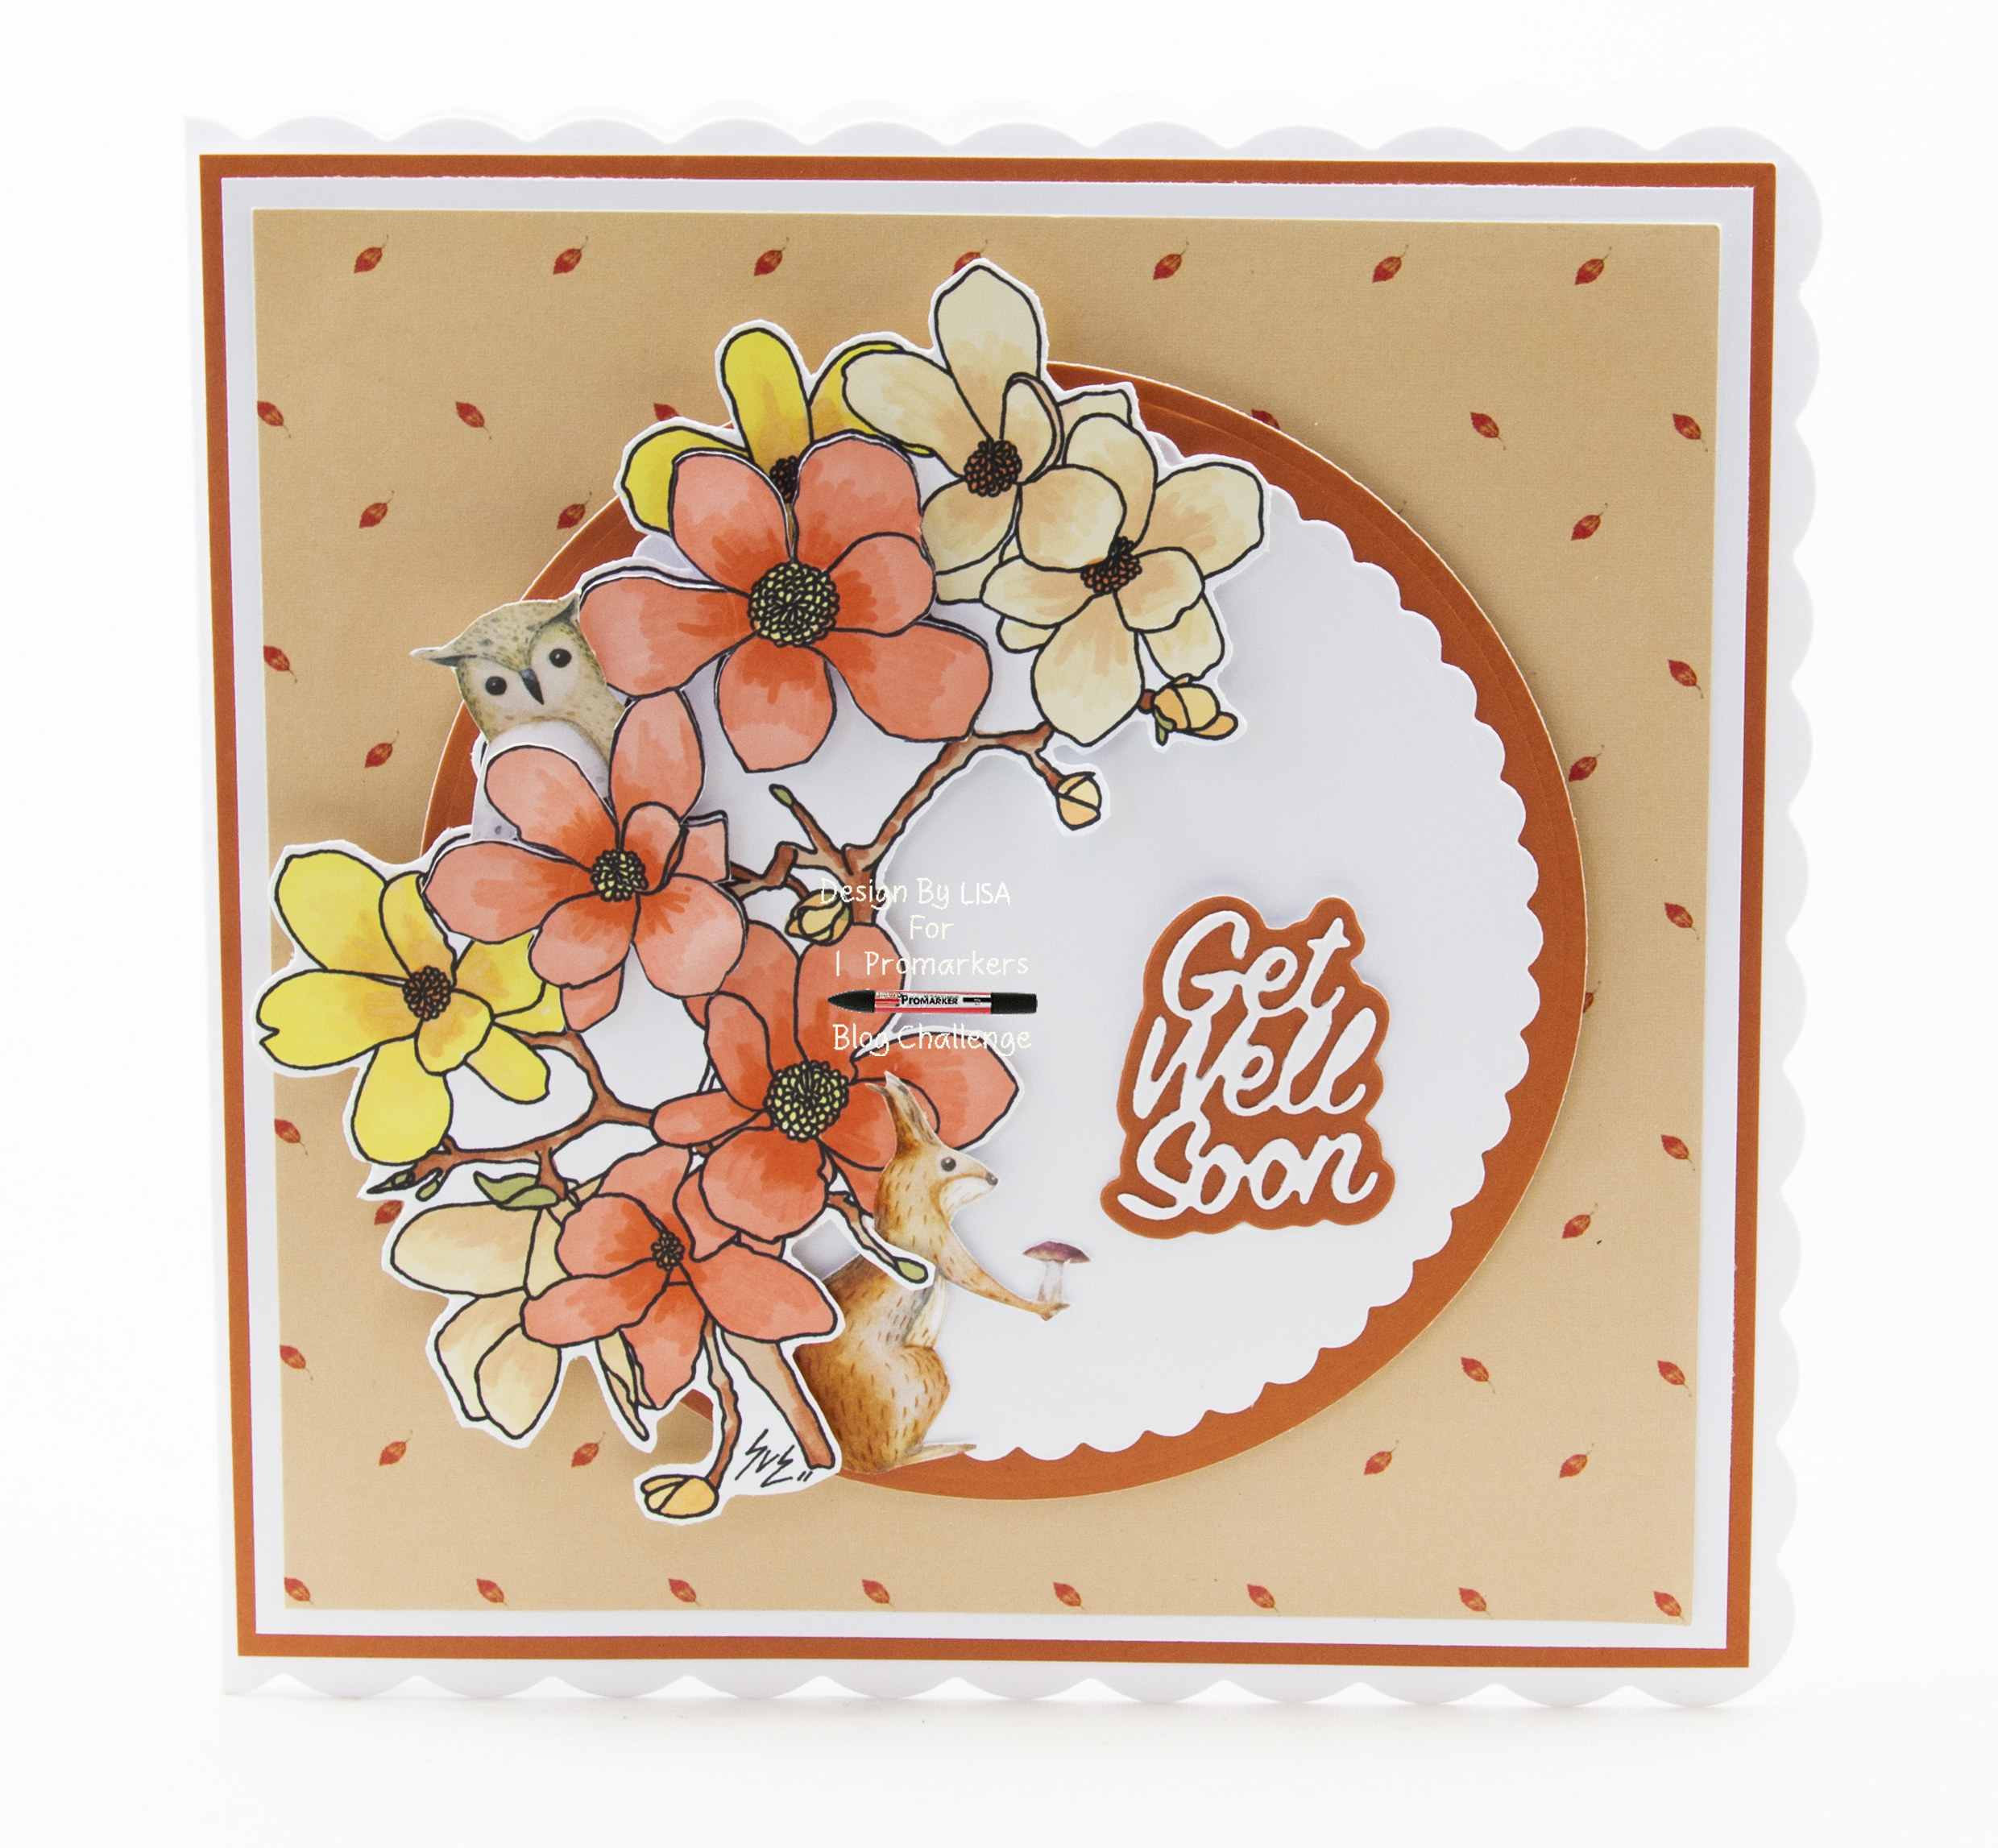 Handmade card using Blossom digital image from Ike's Art